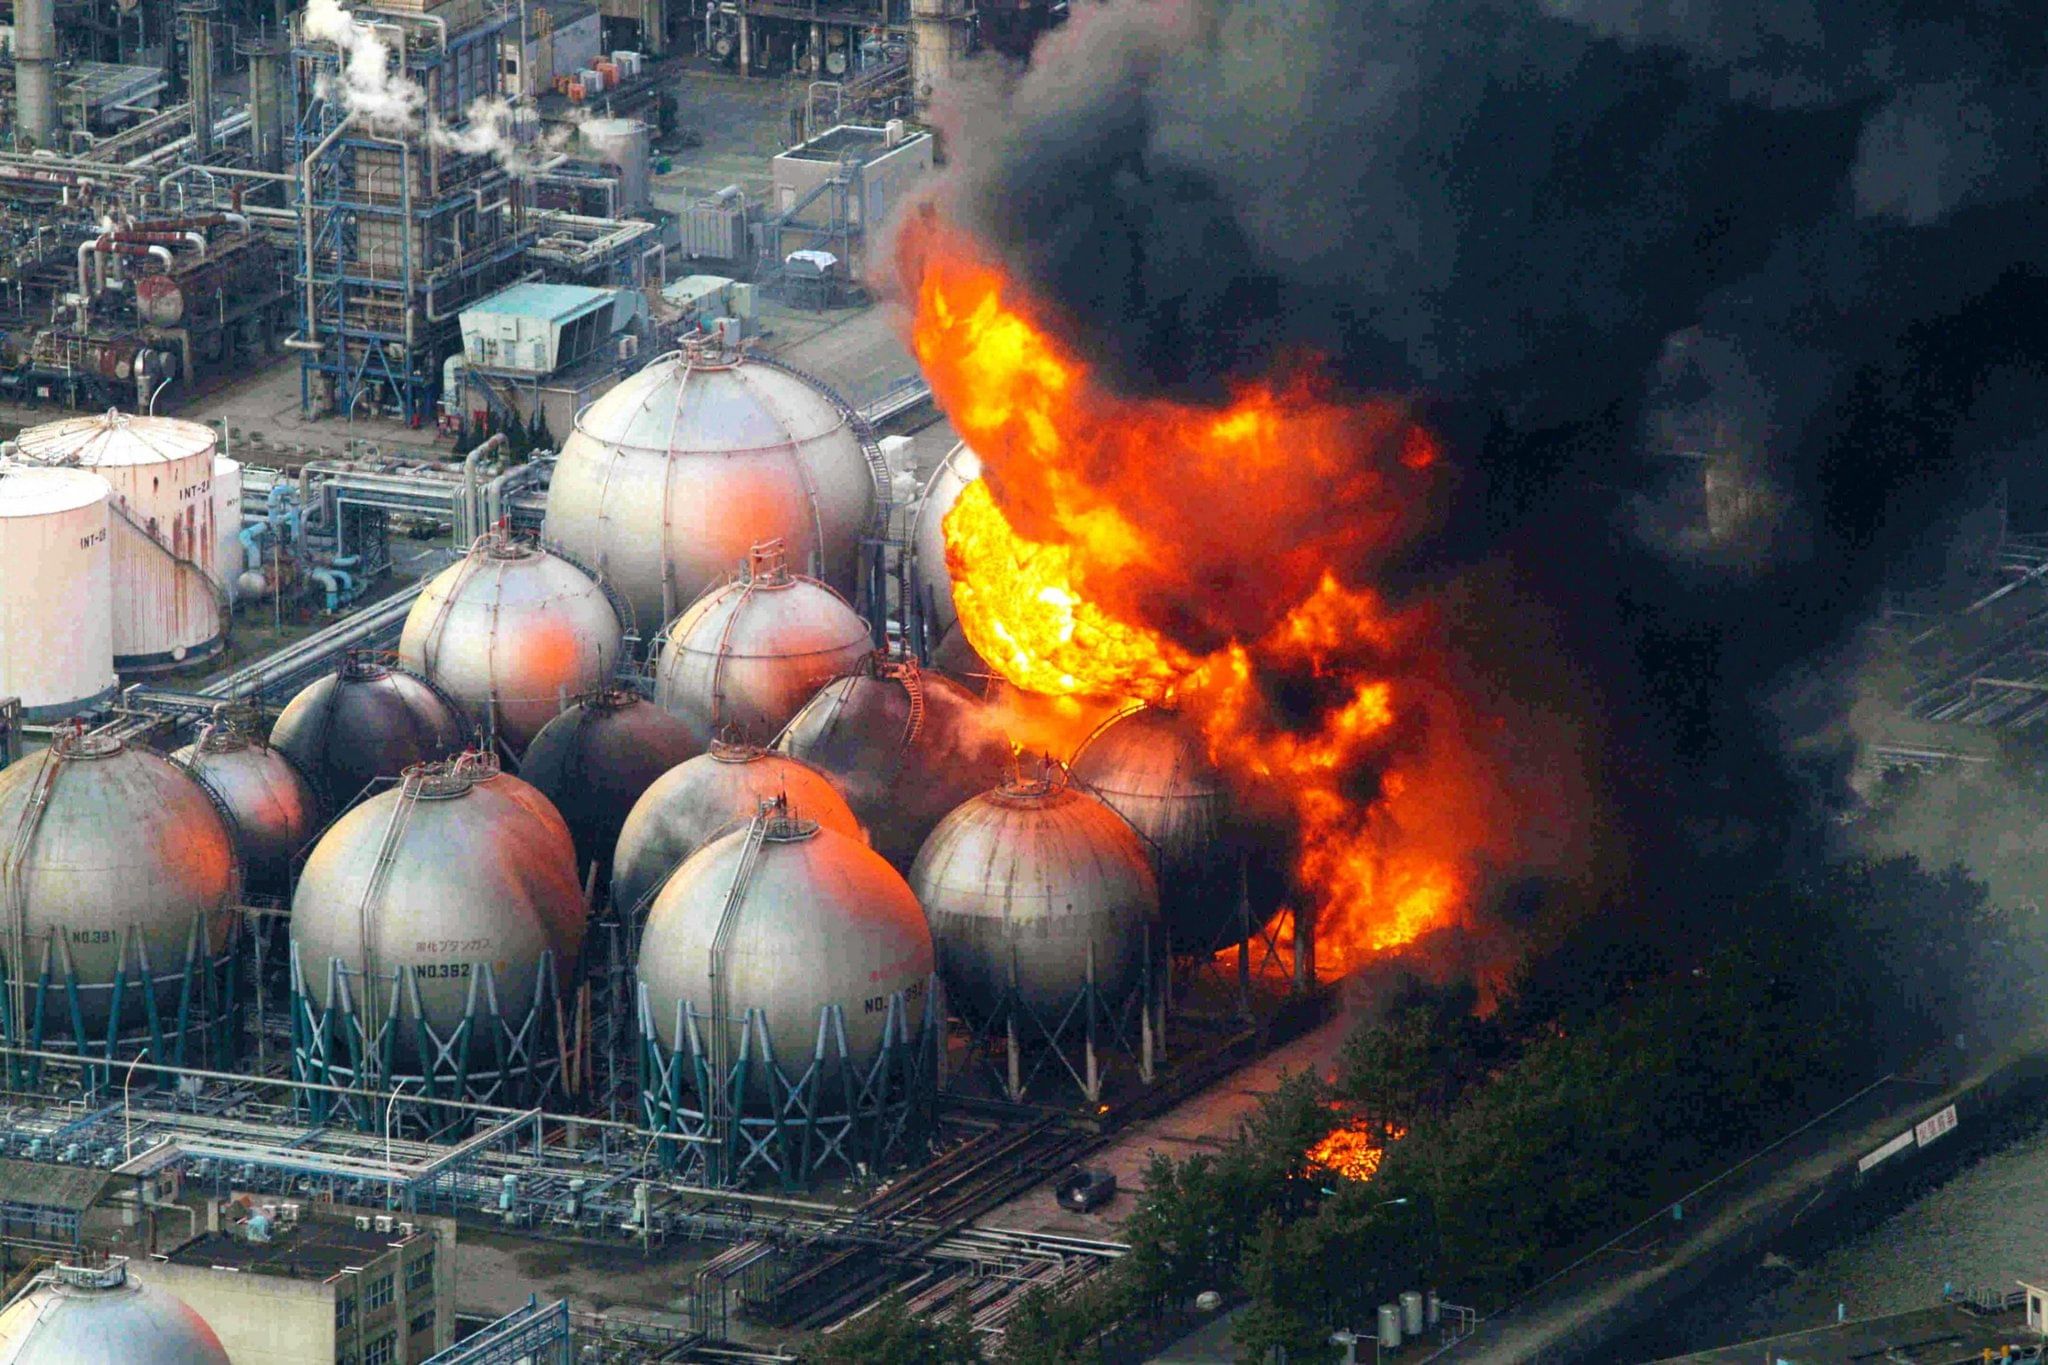 Поражение при взрыве аэс. Авария на АЭС Фукусима-1. Авария на АЭС Фукусима-1 (Япония, 2011).. Техногенные катастрофы Фукусима-1 авария АЭС. Авария на АЭС Фукусима-1 взрыв 1 реактора.